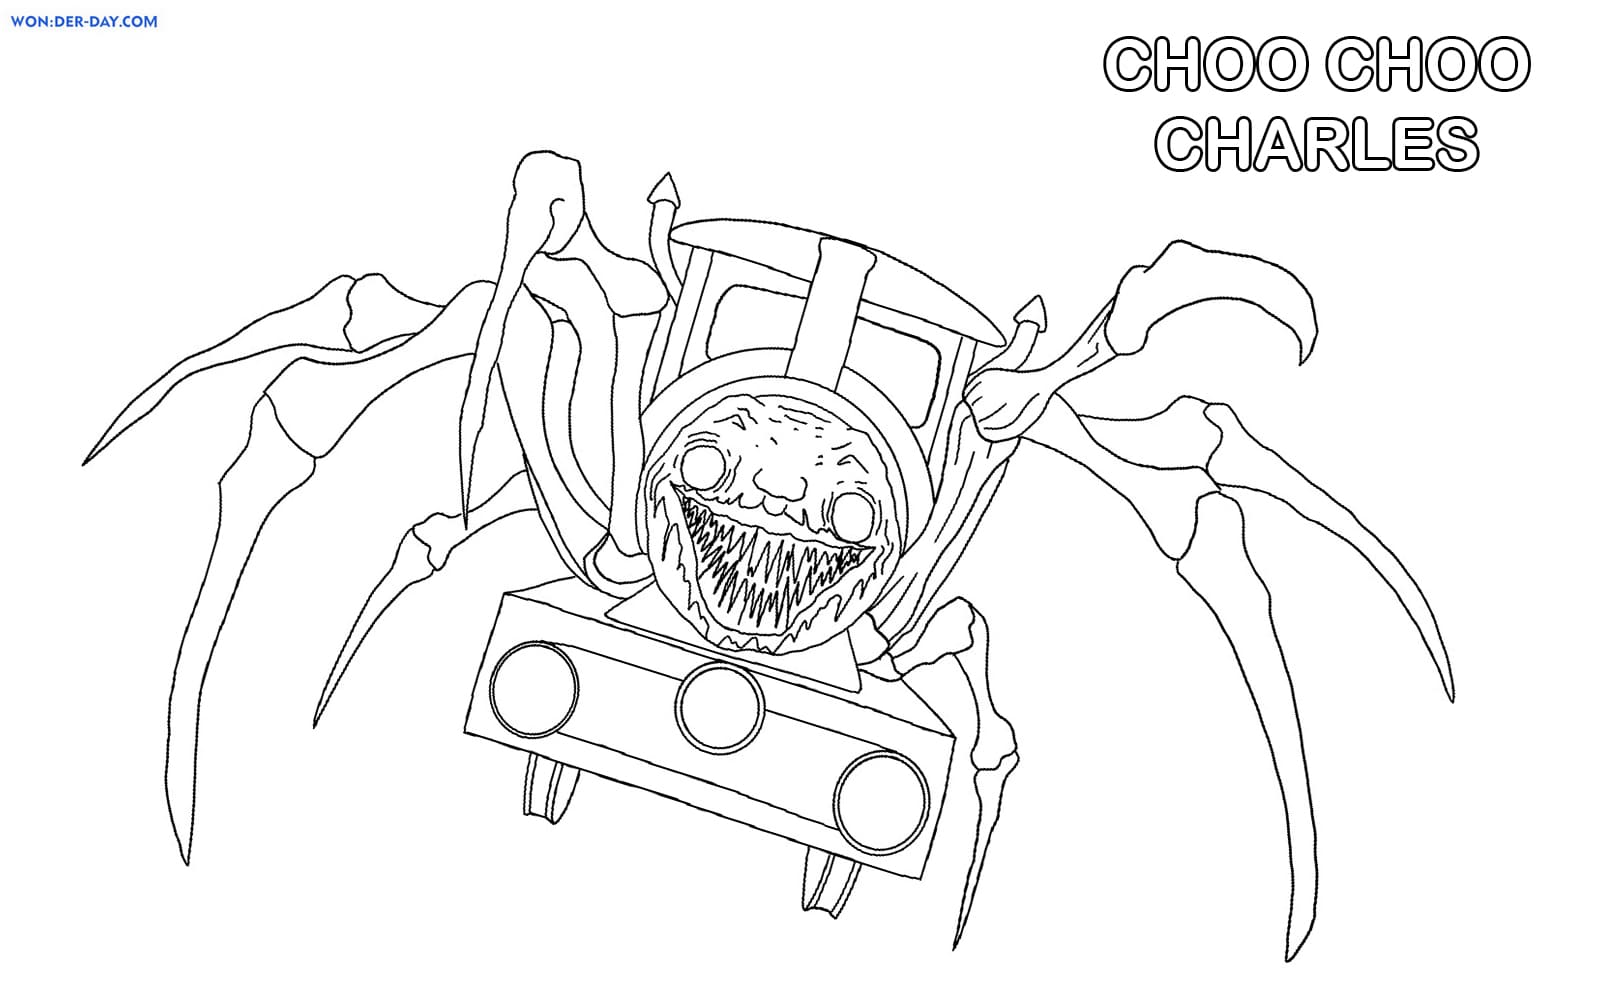 Choo-Choo Charles coloring pages